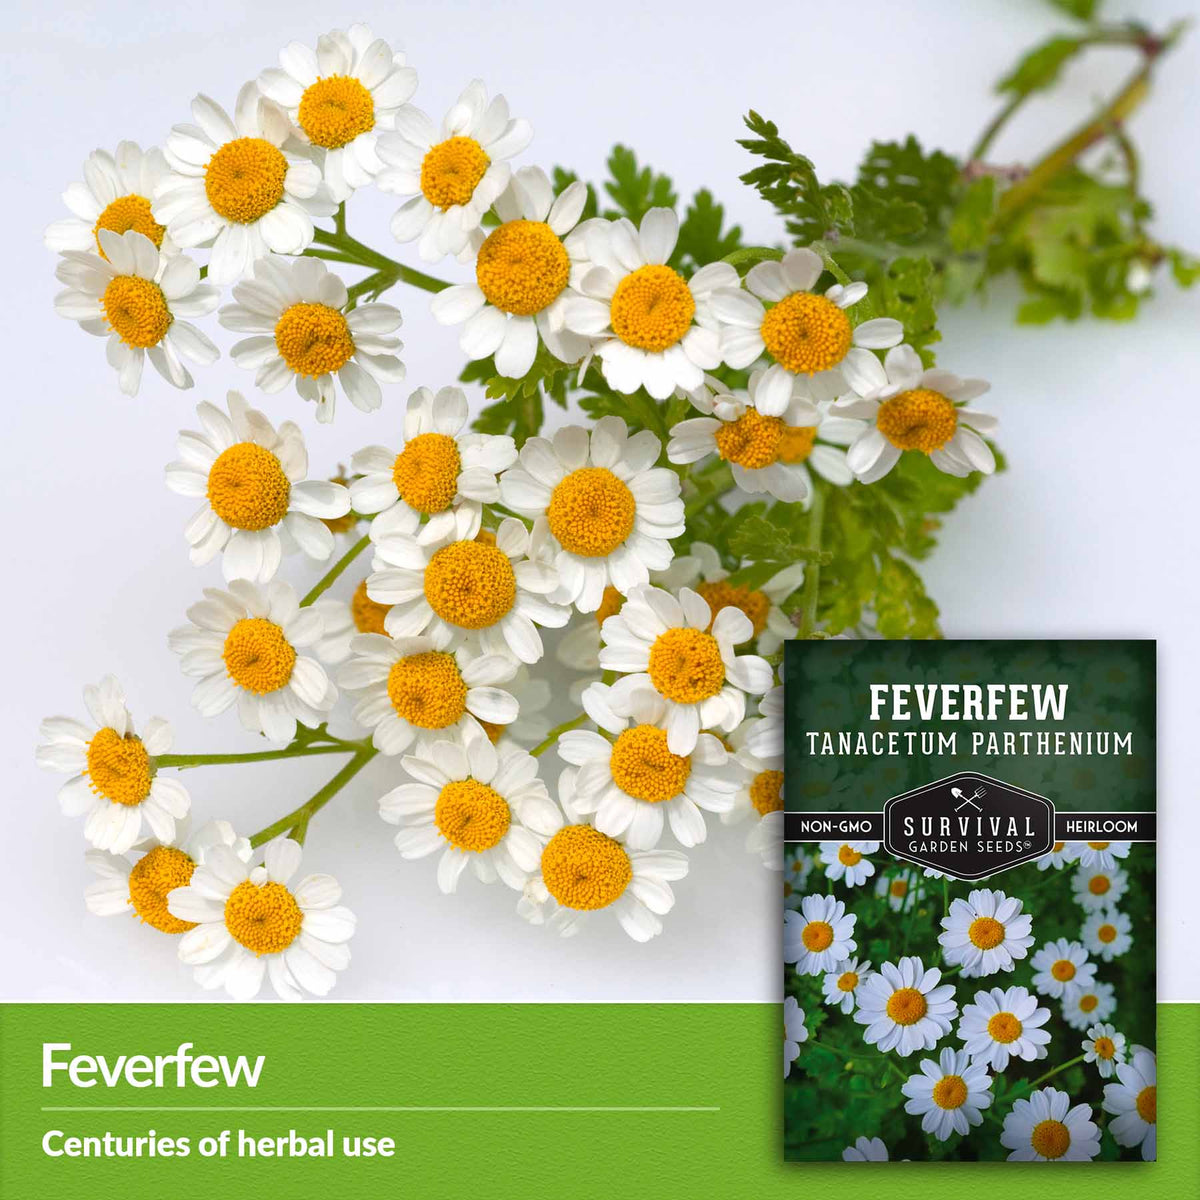 Feverfew - centuries of herbal use